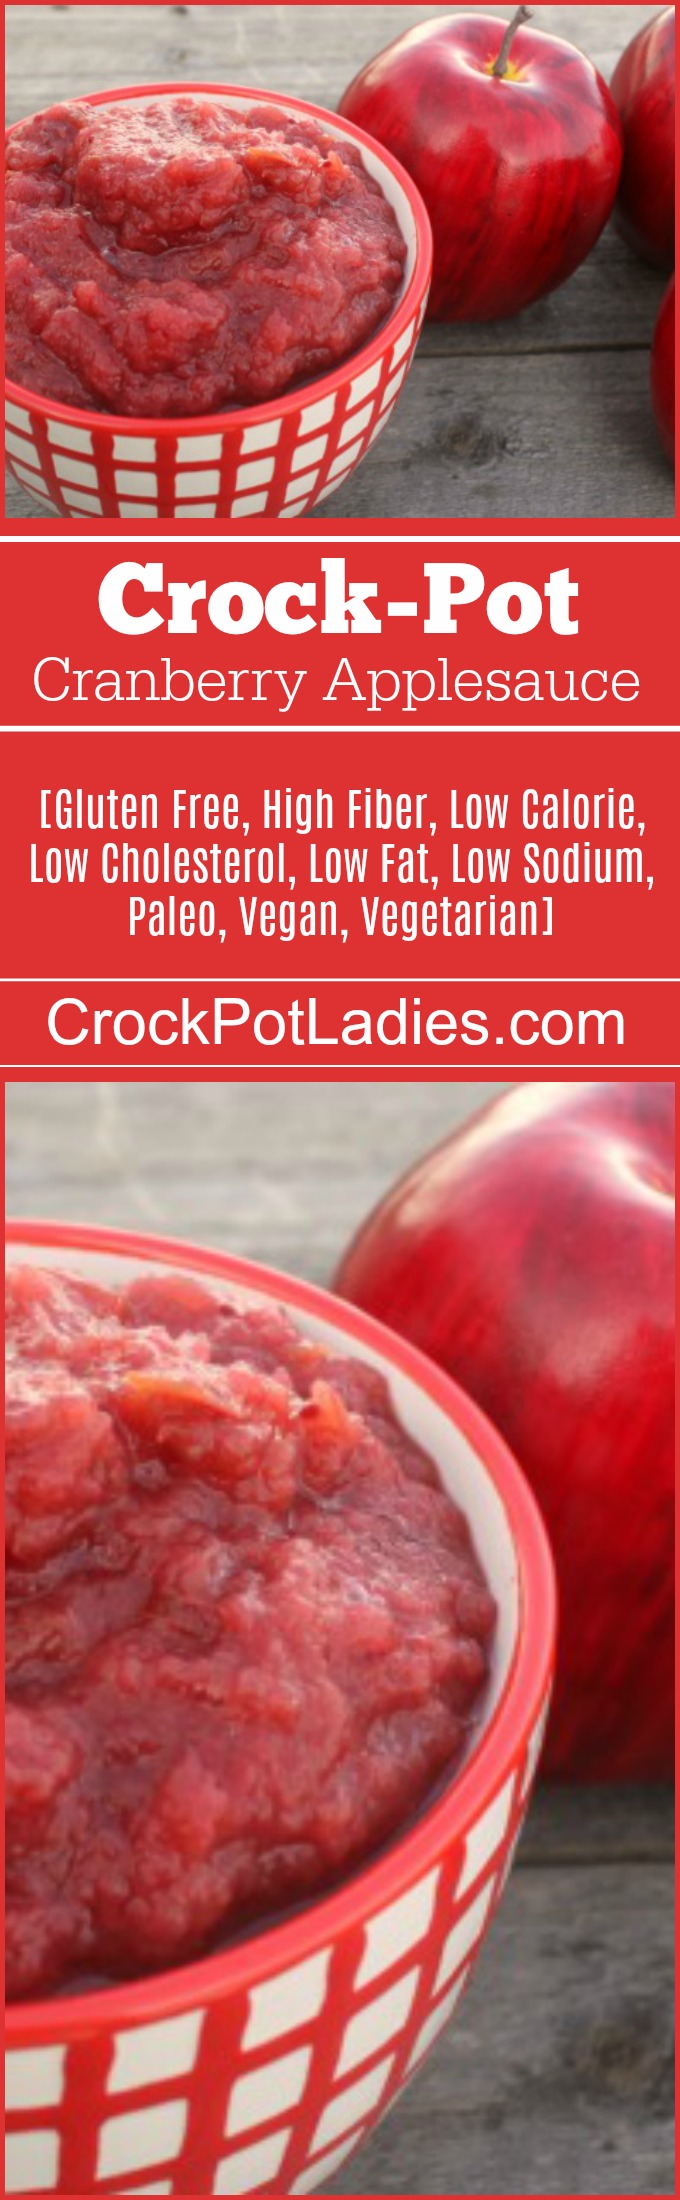 Crock-Pot Cranberry Applesauce